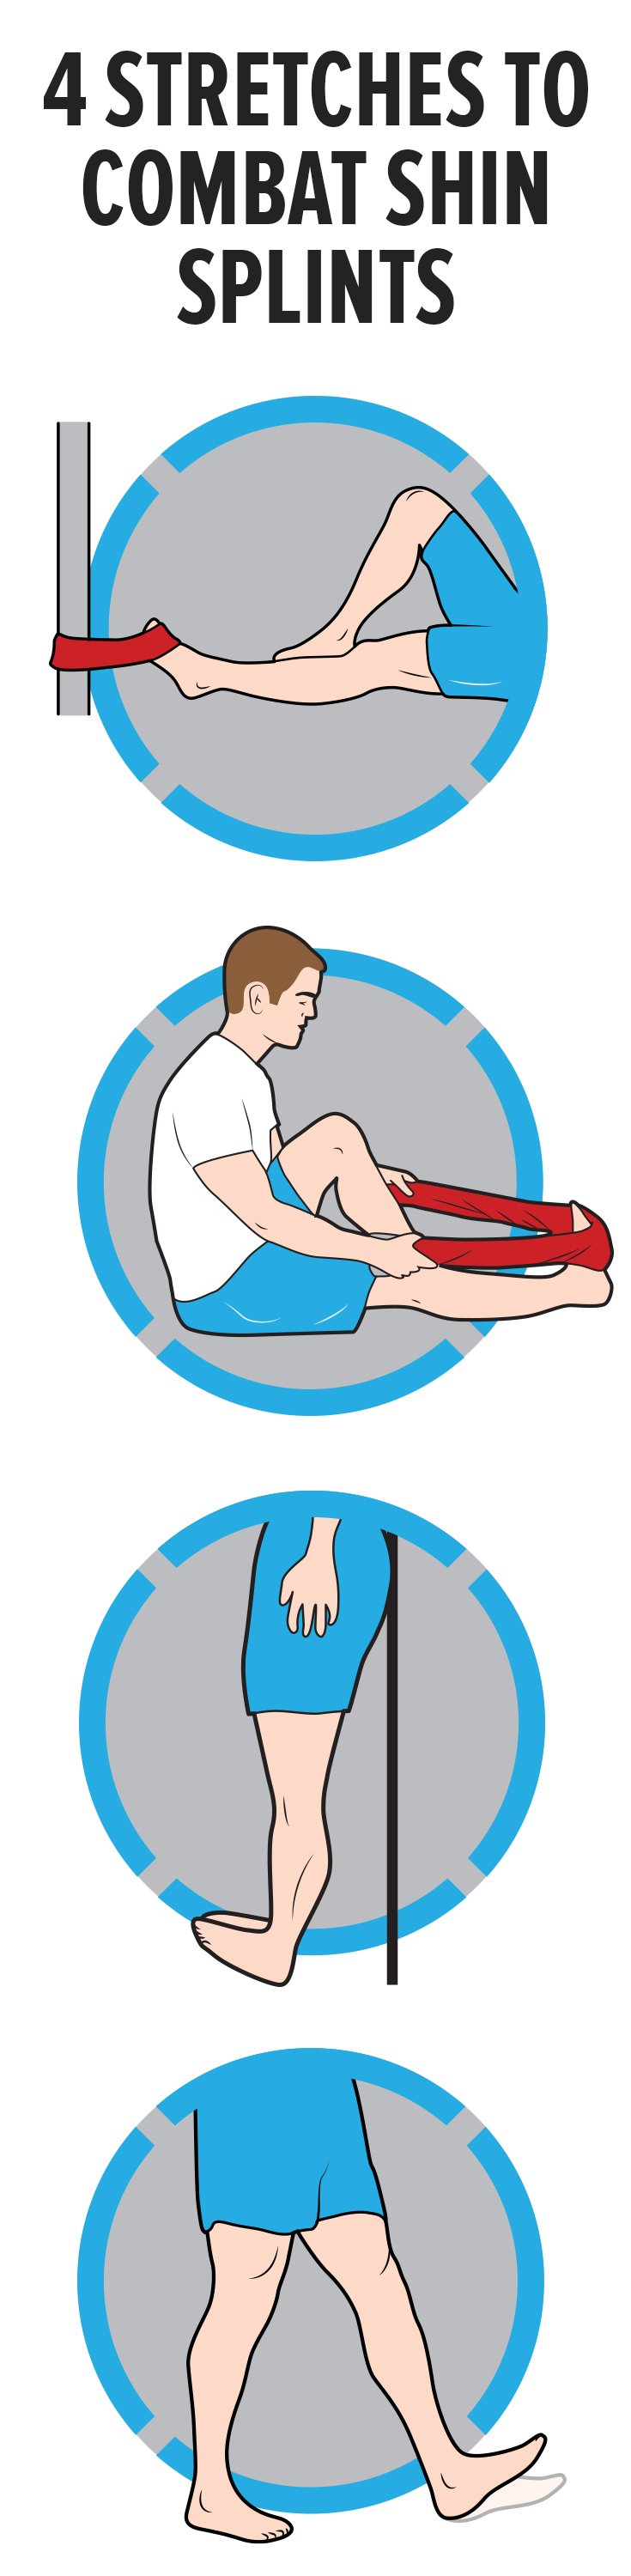 4 stretches to combat shin splints